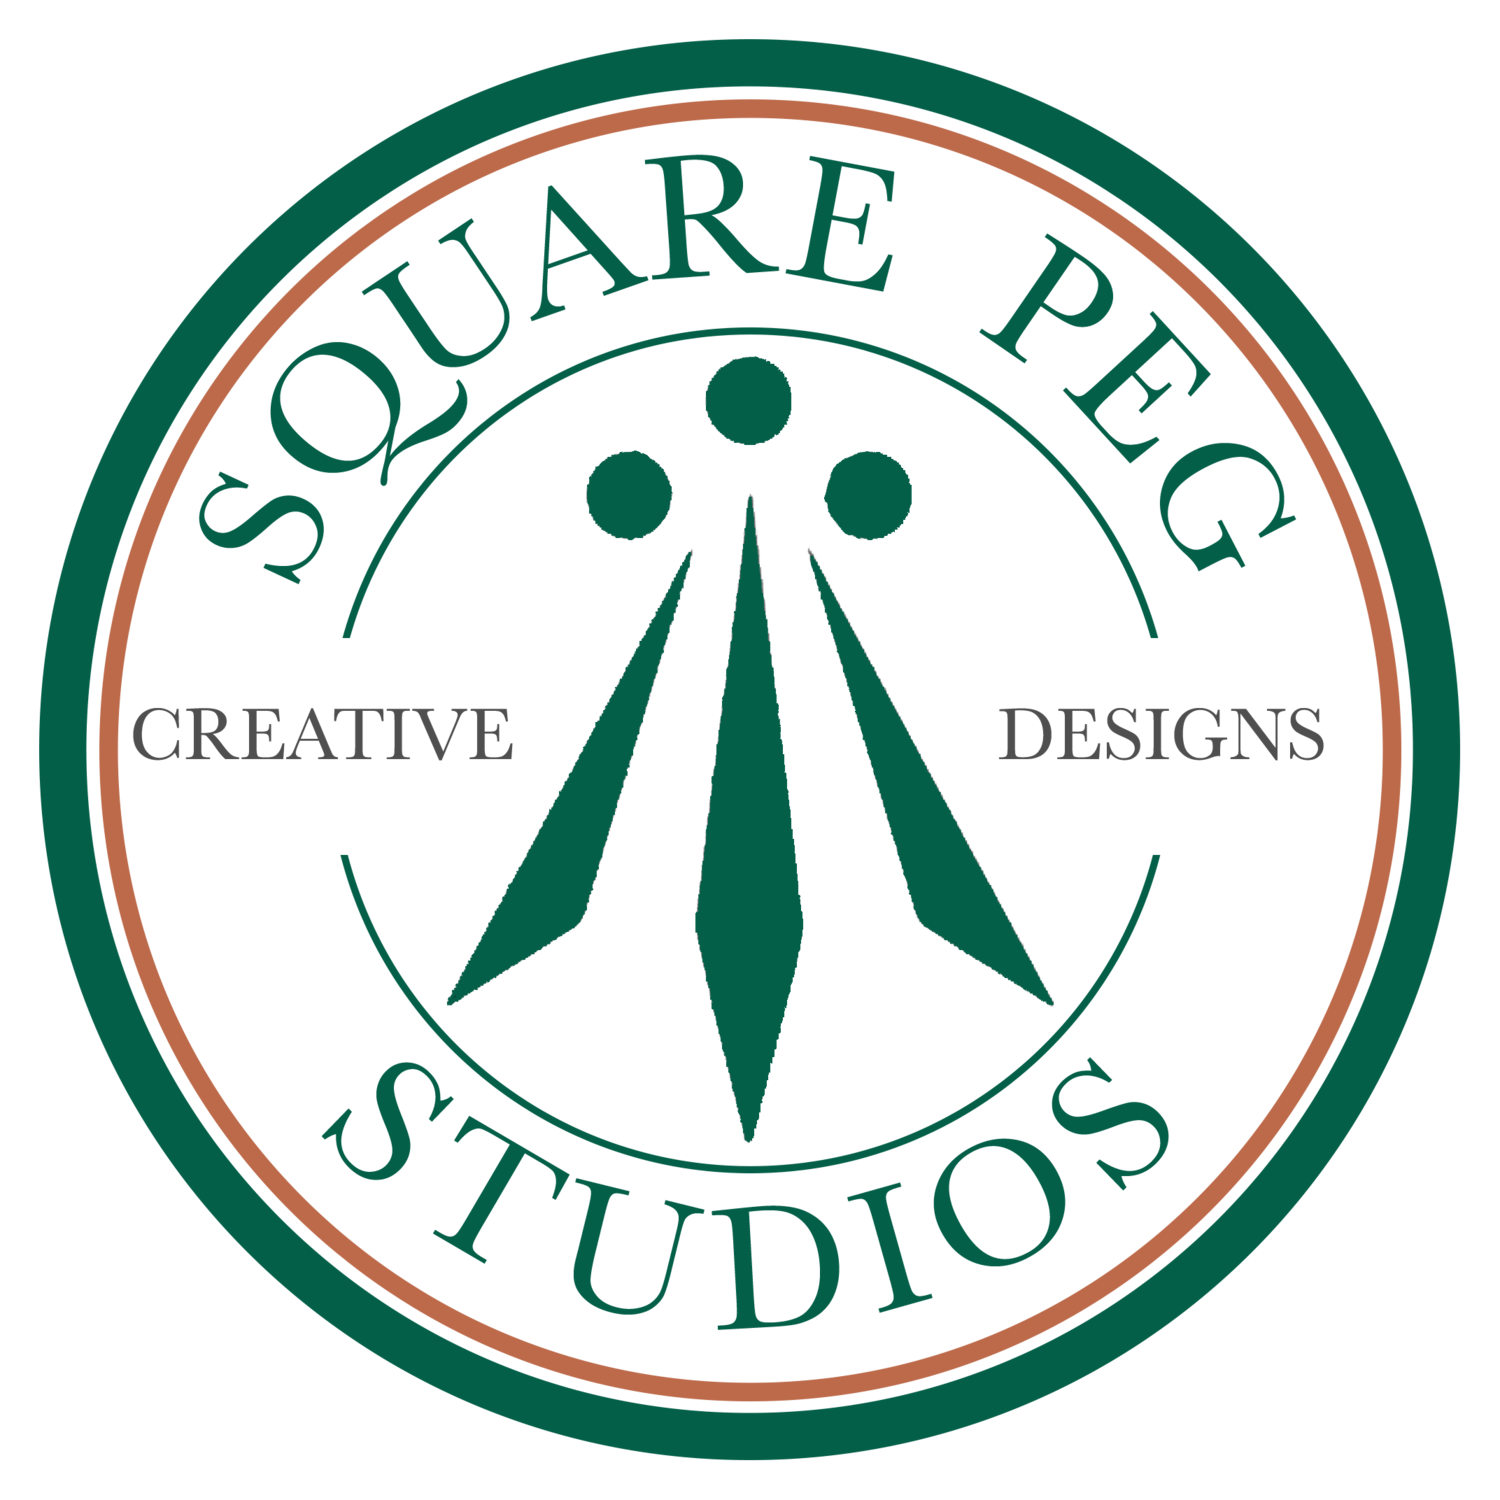  Square Peg Studios